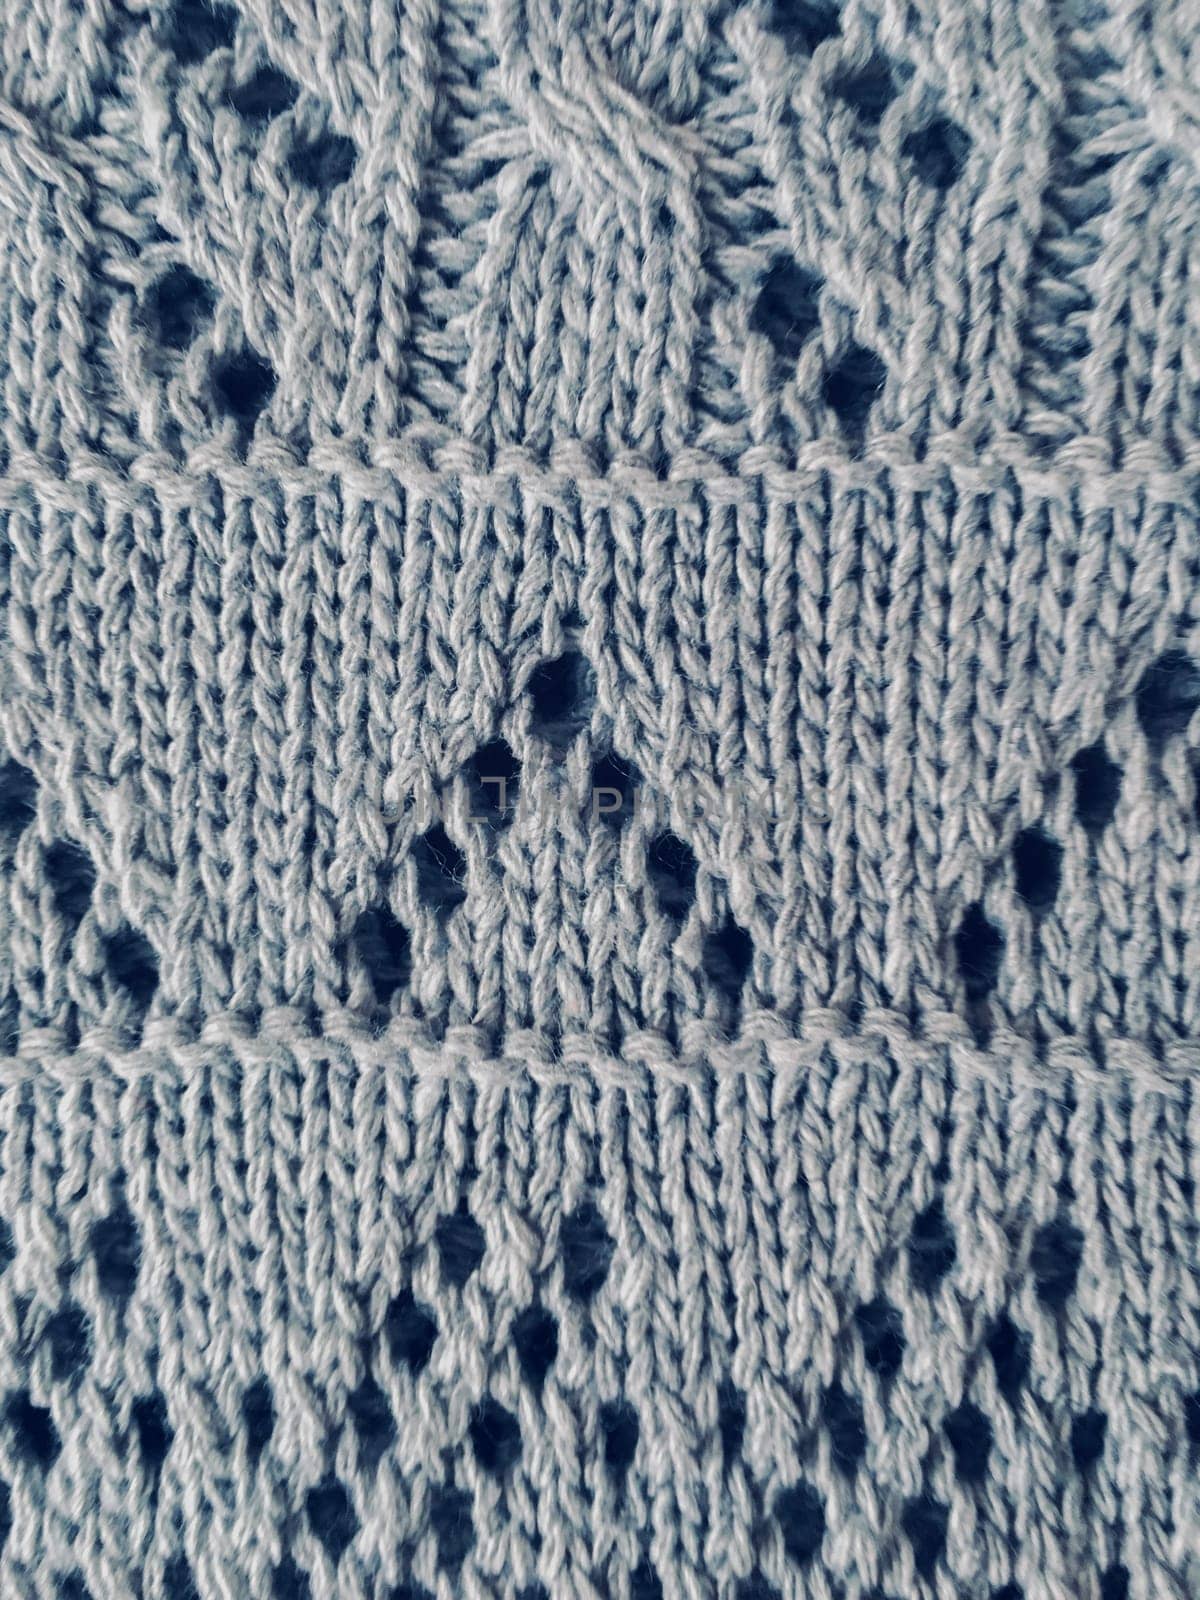 Organic Knitted Ornament. Scandinavian Detail Wallpaper. Abstract Cotton Thread. Jacquard Yarn. Knitted Ornament. Christmas Woolen Fabric. Knitwear Soft Background. Fiber Knitted Ornament.